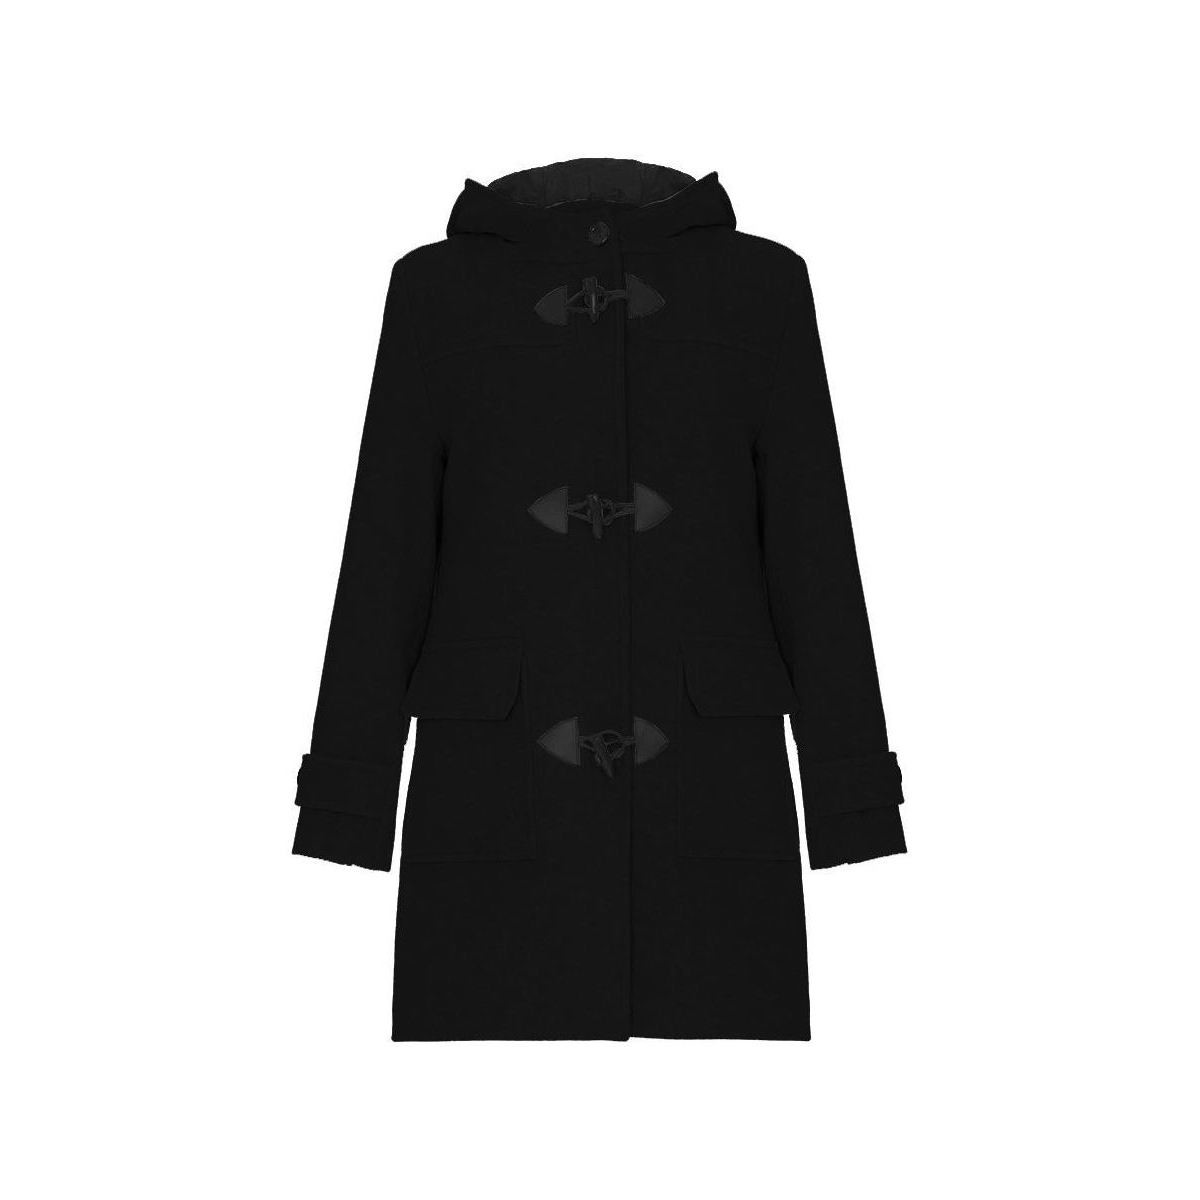 Clothing Women Coats De La Creme Wool Cashmere Winter Hooded Duffle Coat Black